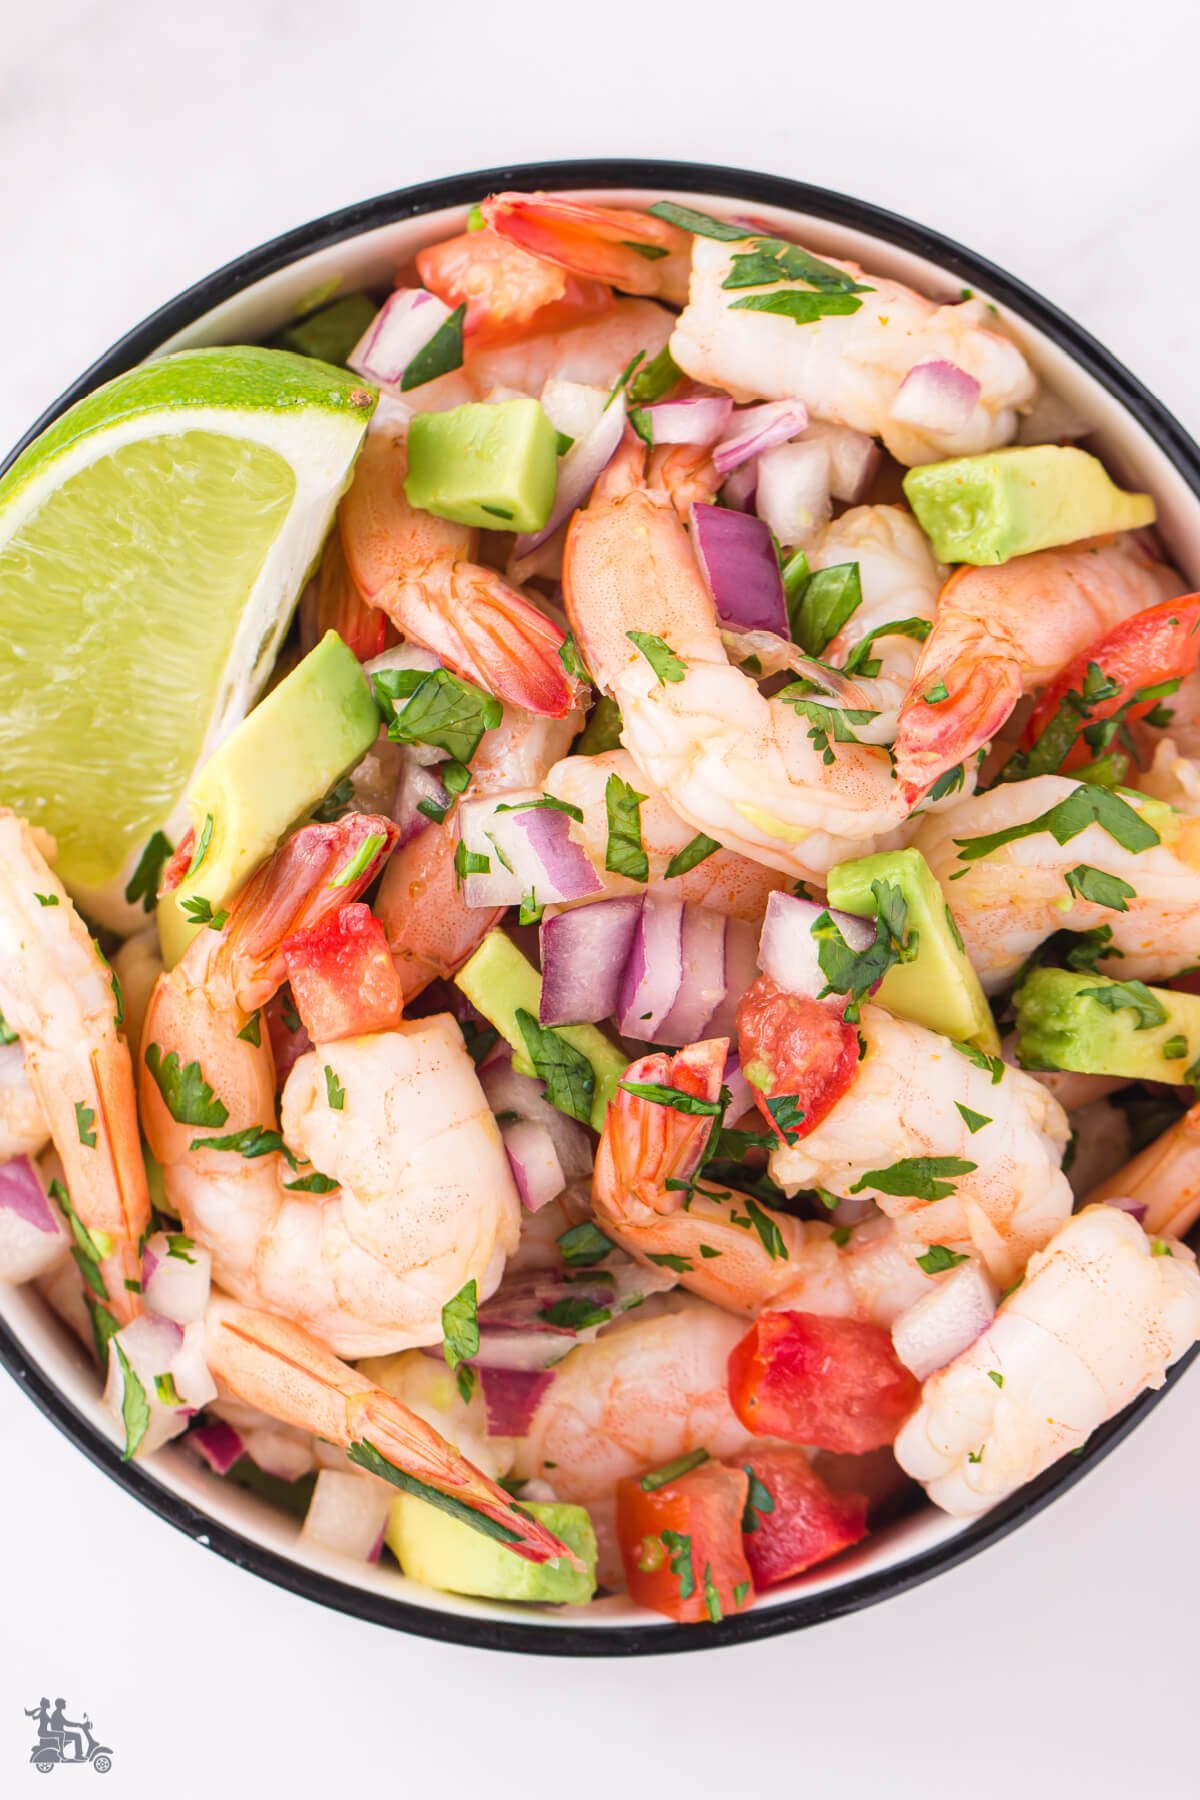 Overhead view of an appetizer recipe of shrimp, avocado, tomato, and cilantro.